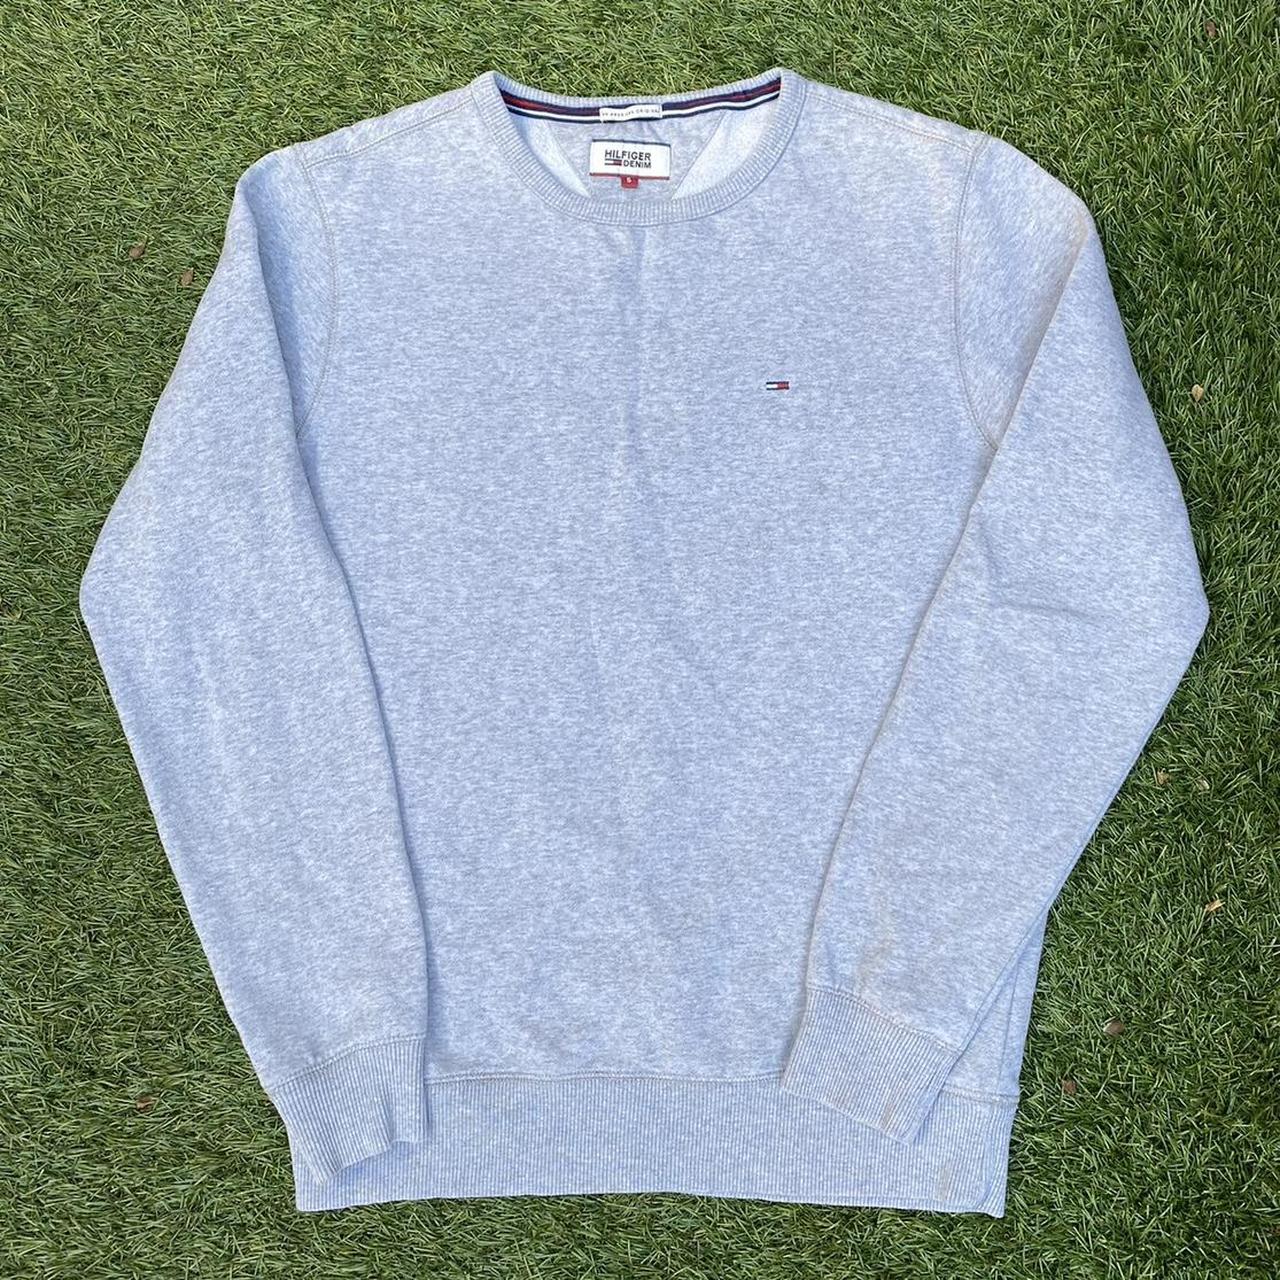 Grey Tommy Hilfiger Logo Sweatshirt •Size is a... - Depop